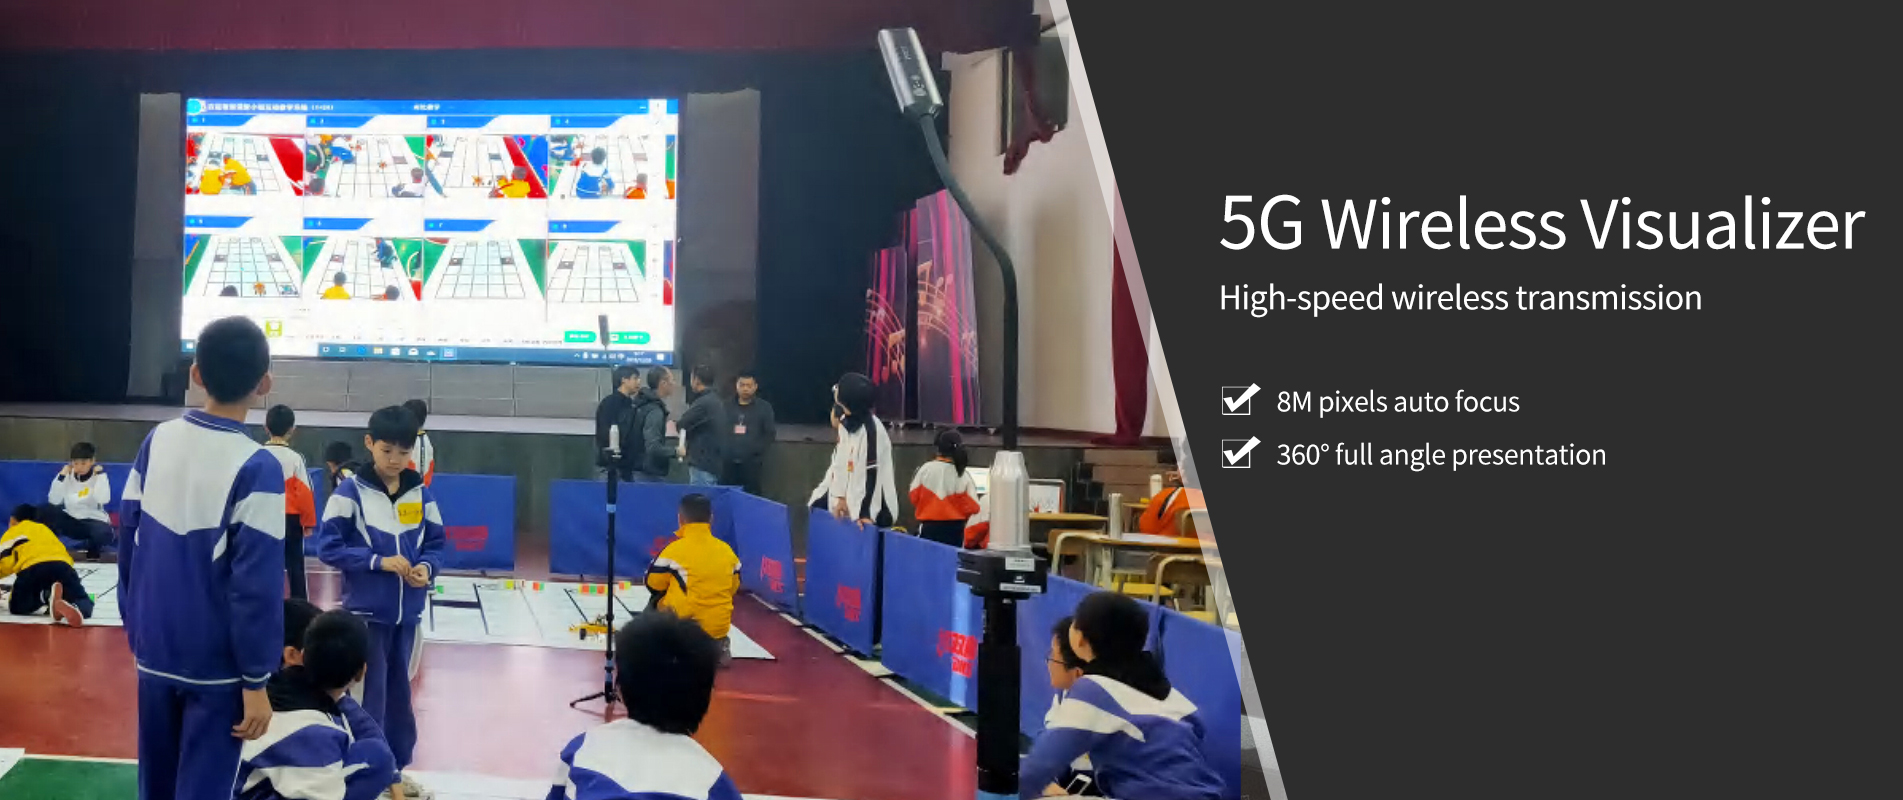 5G wireless visualizer